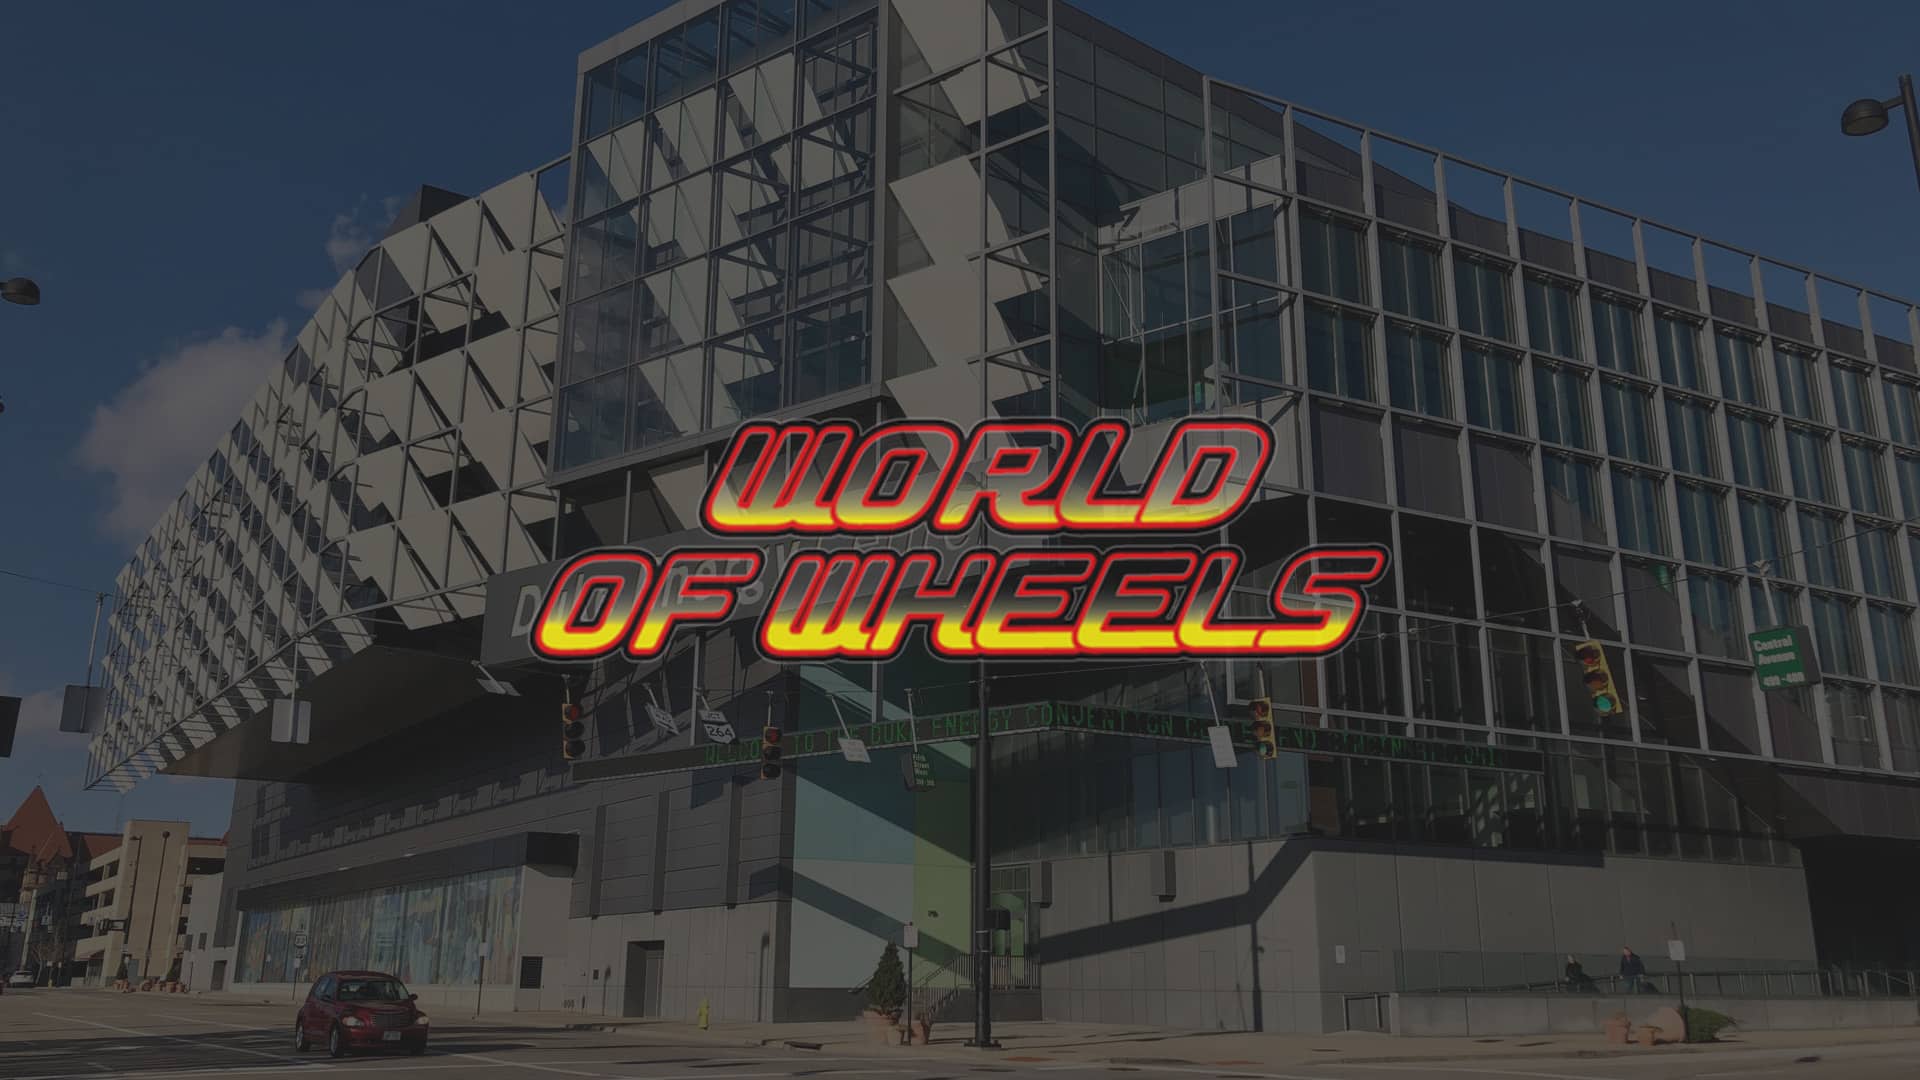 World of Wheels Cincinnati